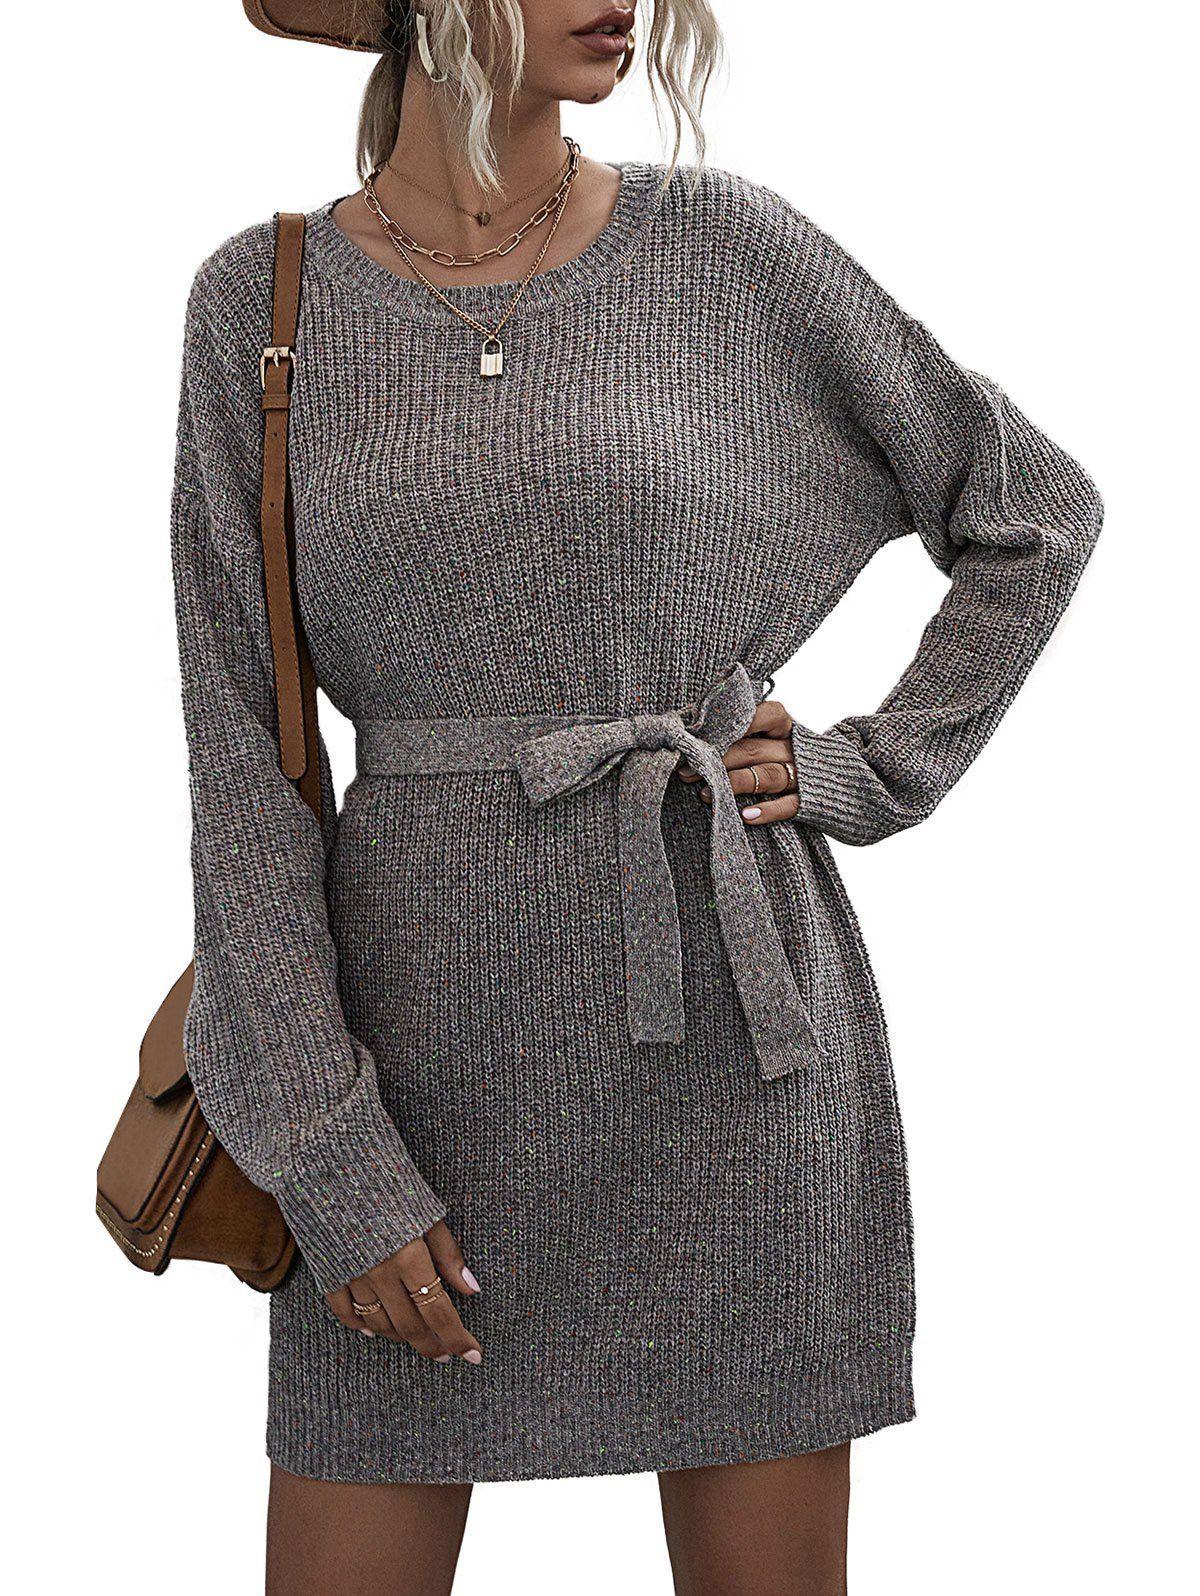 Heathered Belt Sweater Dress - GRAY L